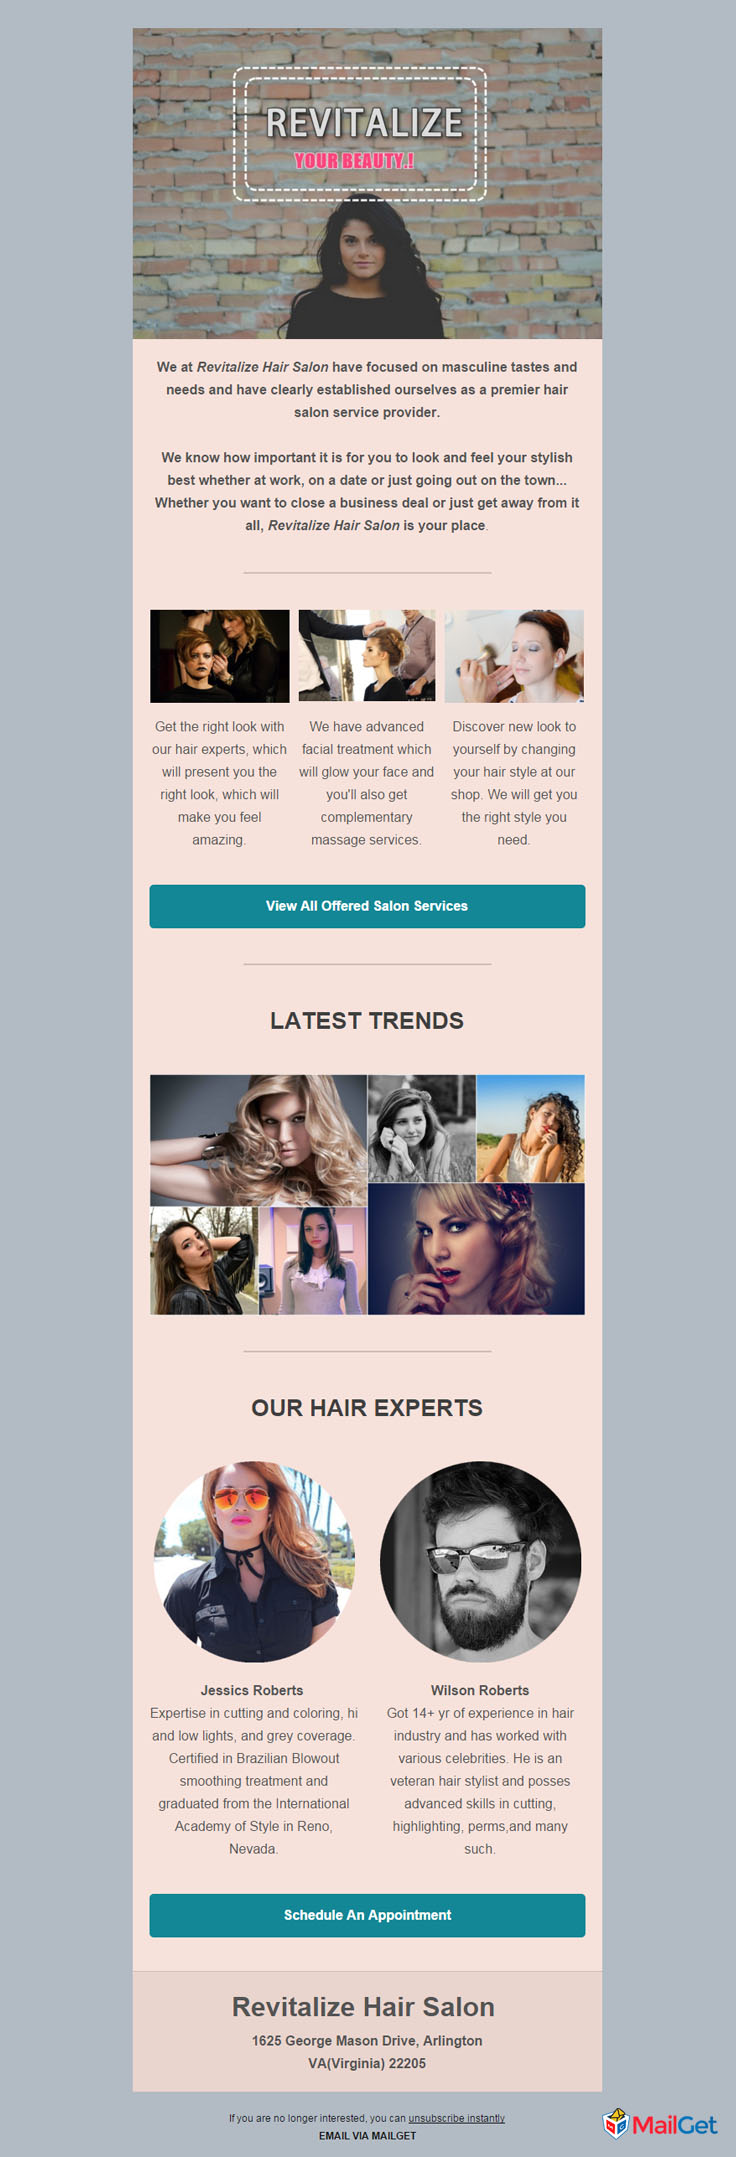 Free Hair Salon Email Templates